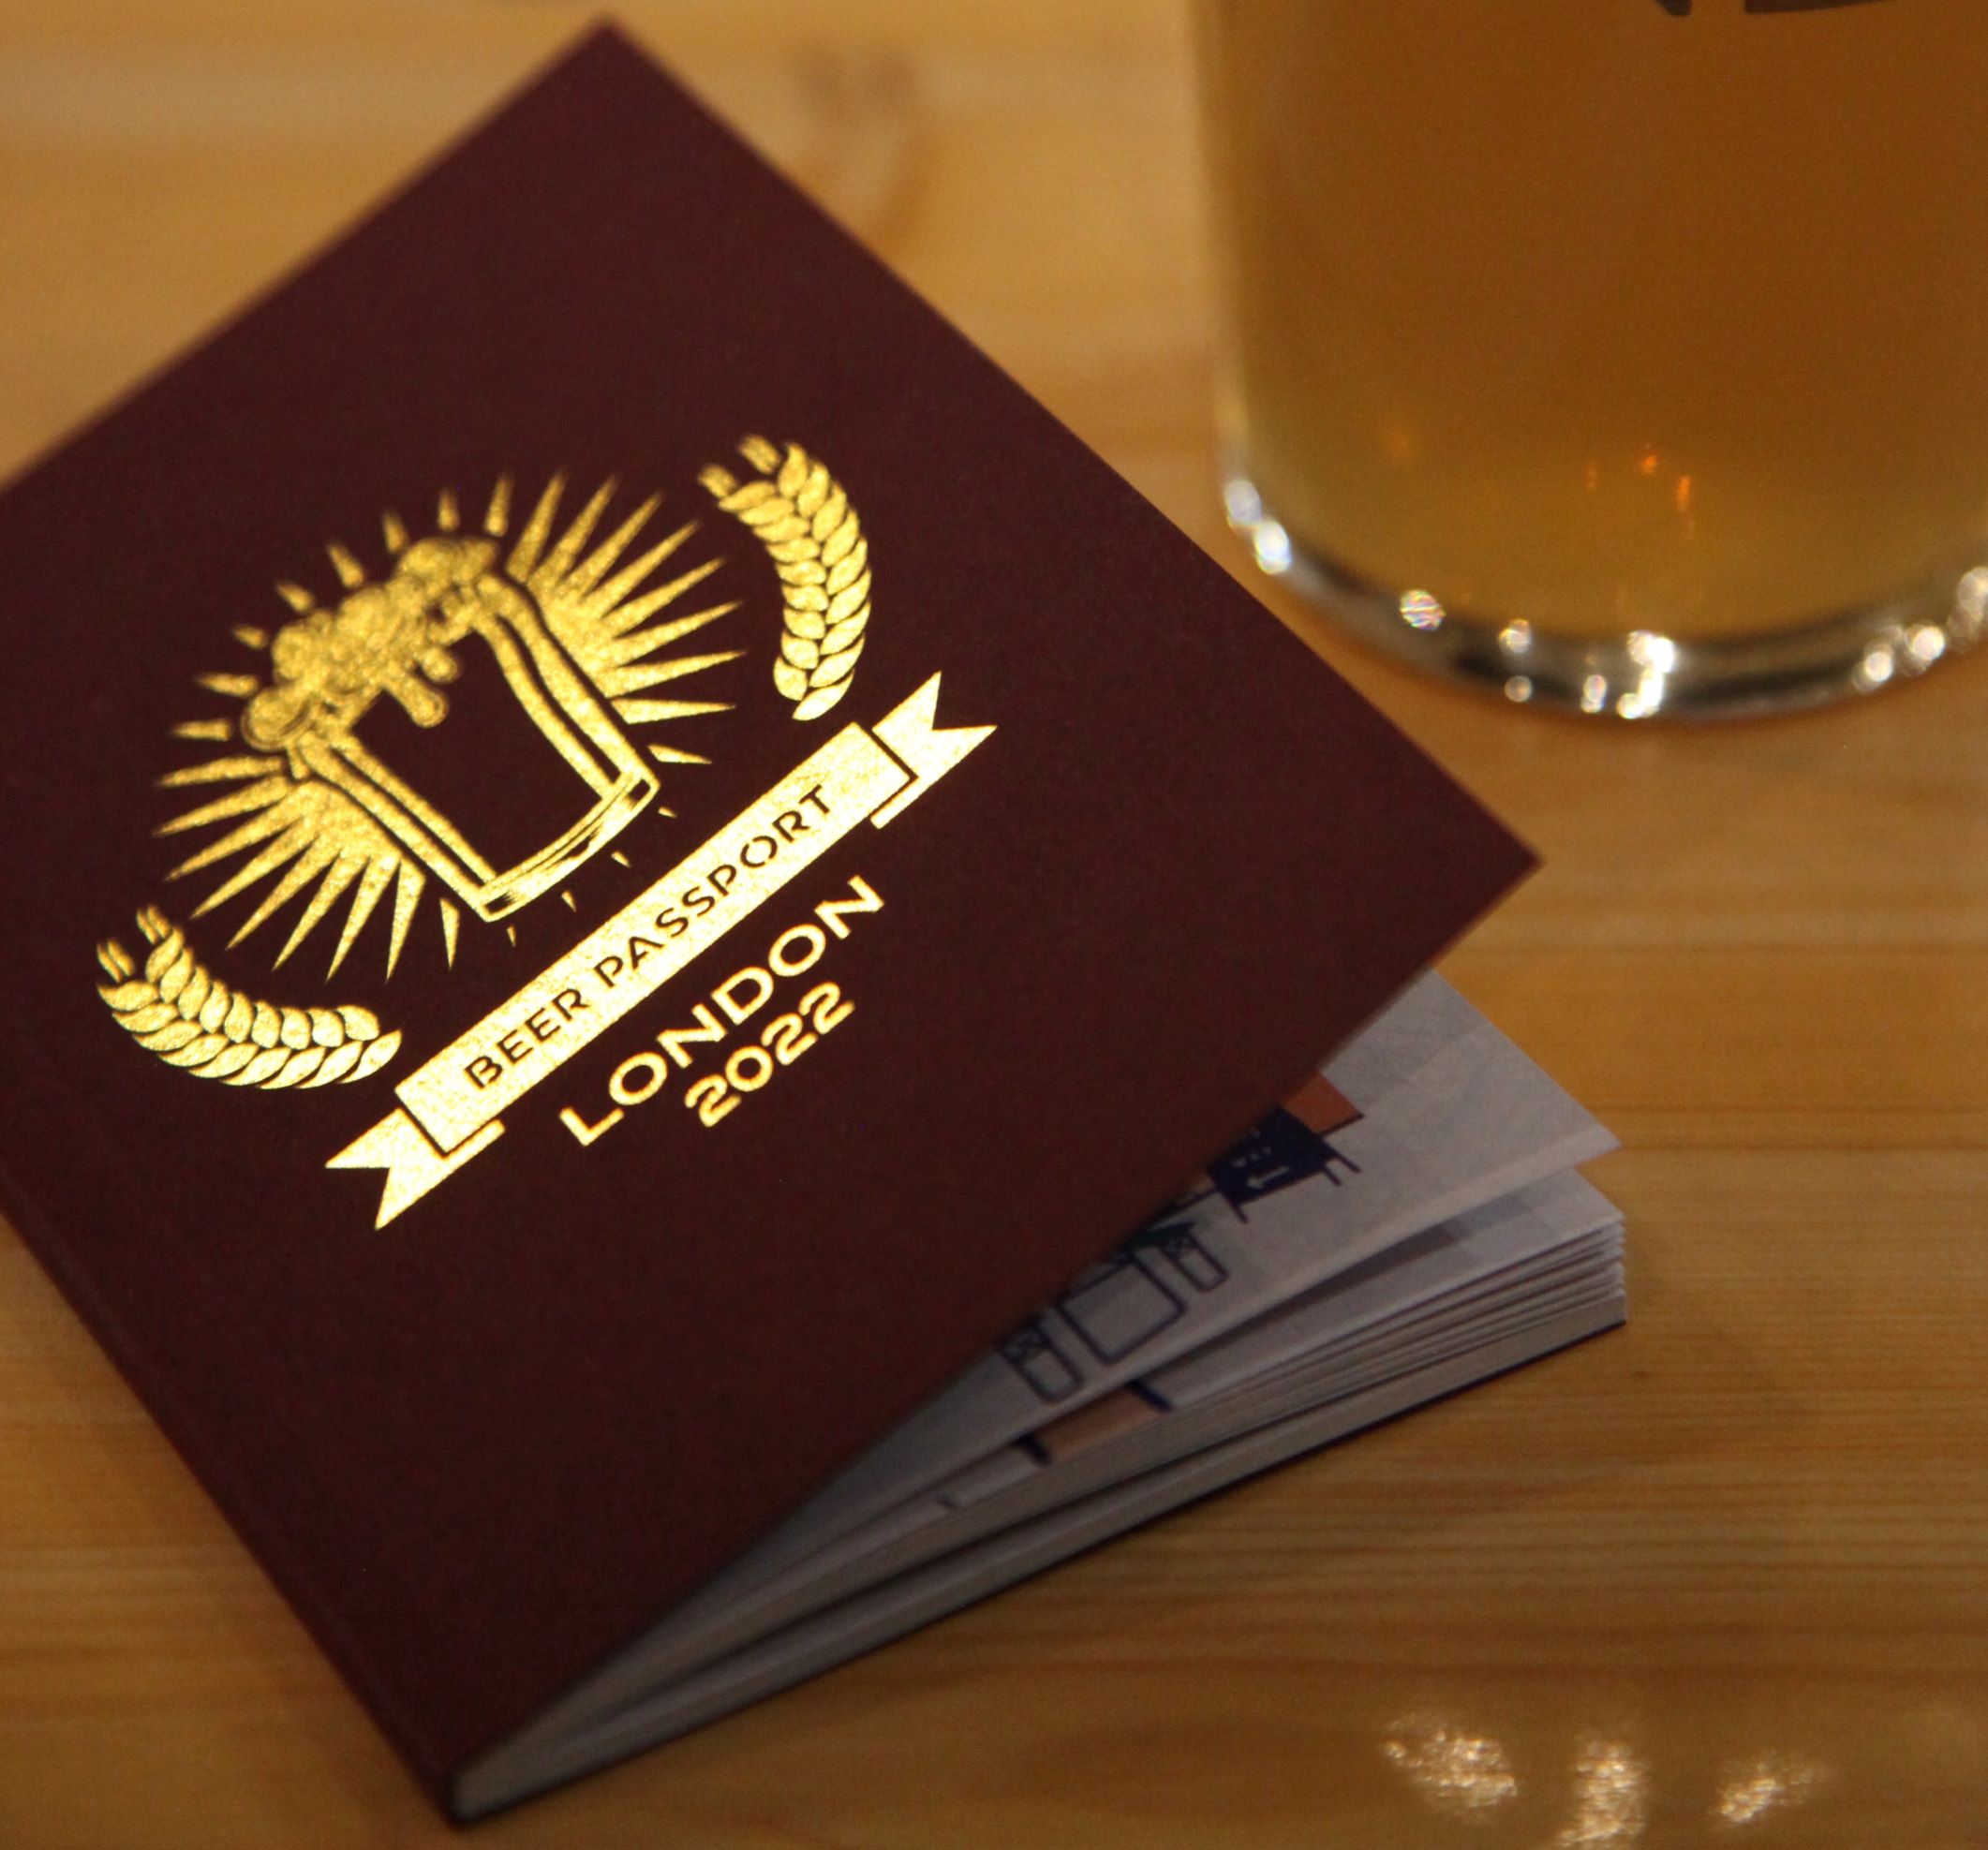 Have you got your Beer Passport?